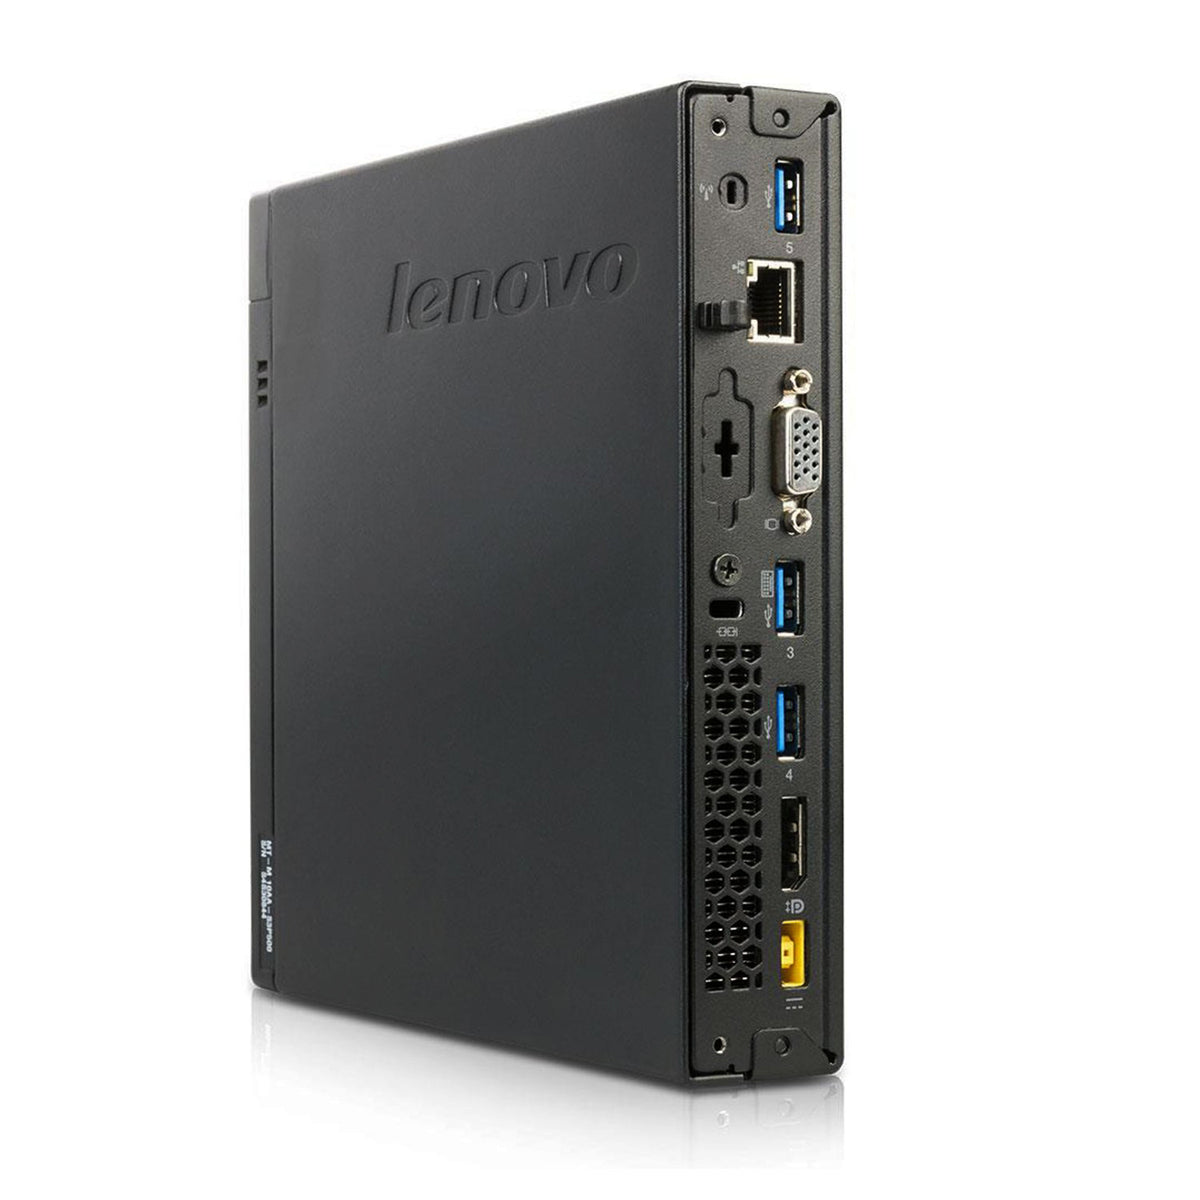 Lenovo ThinkCentre M93p Tiny Desktop, Quad Core i7 4785T 2.2